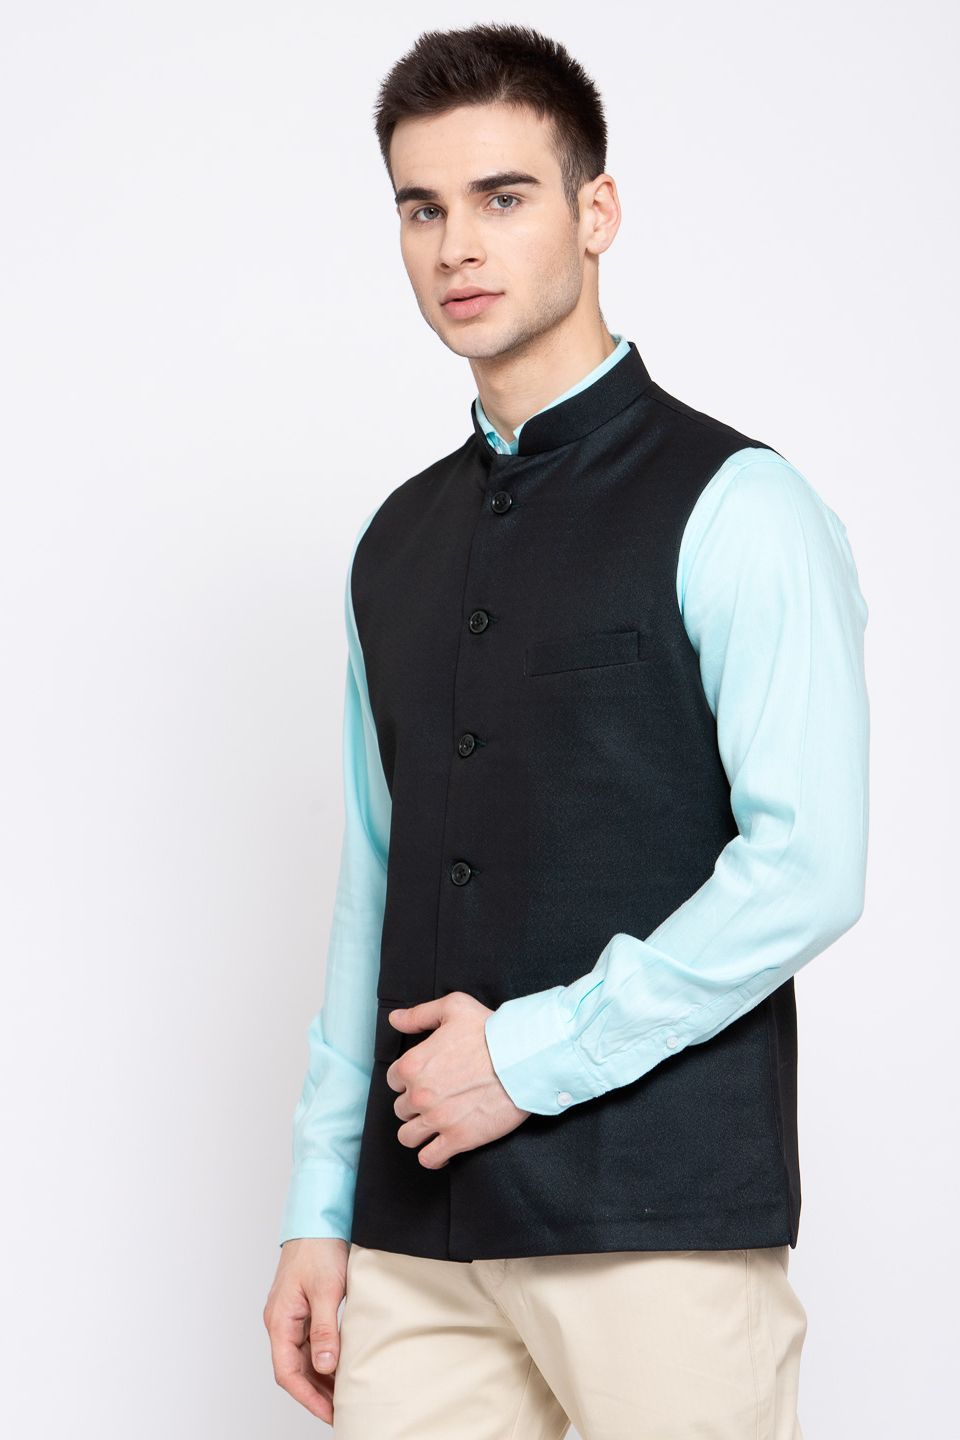 Wintage Men's Poly Blend Formal and Evening Nehru Jacket Vest Waistcoat : Green